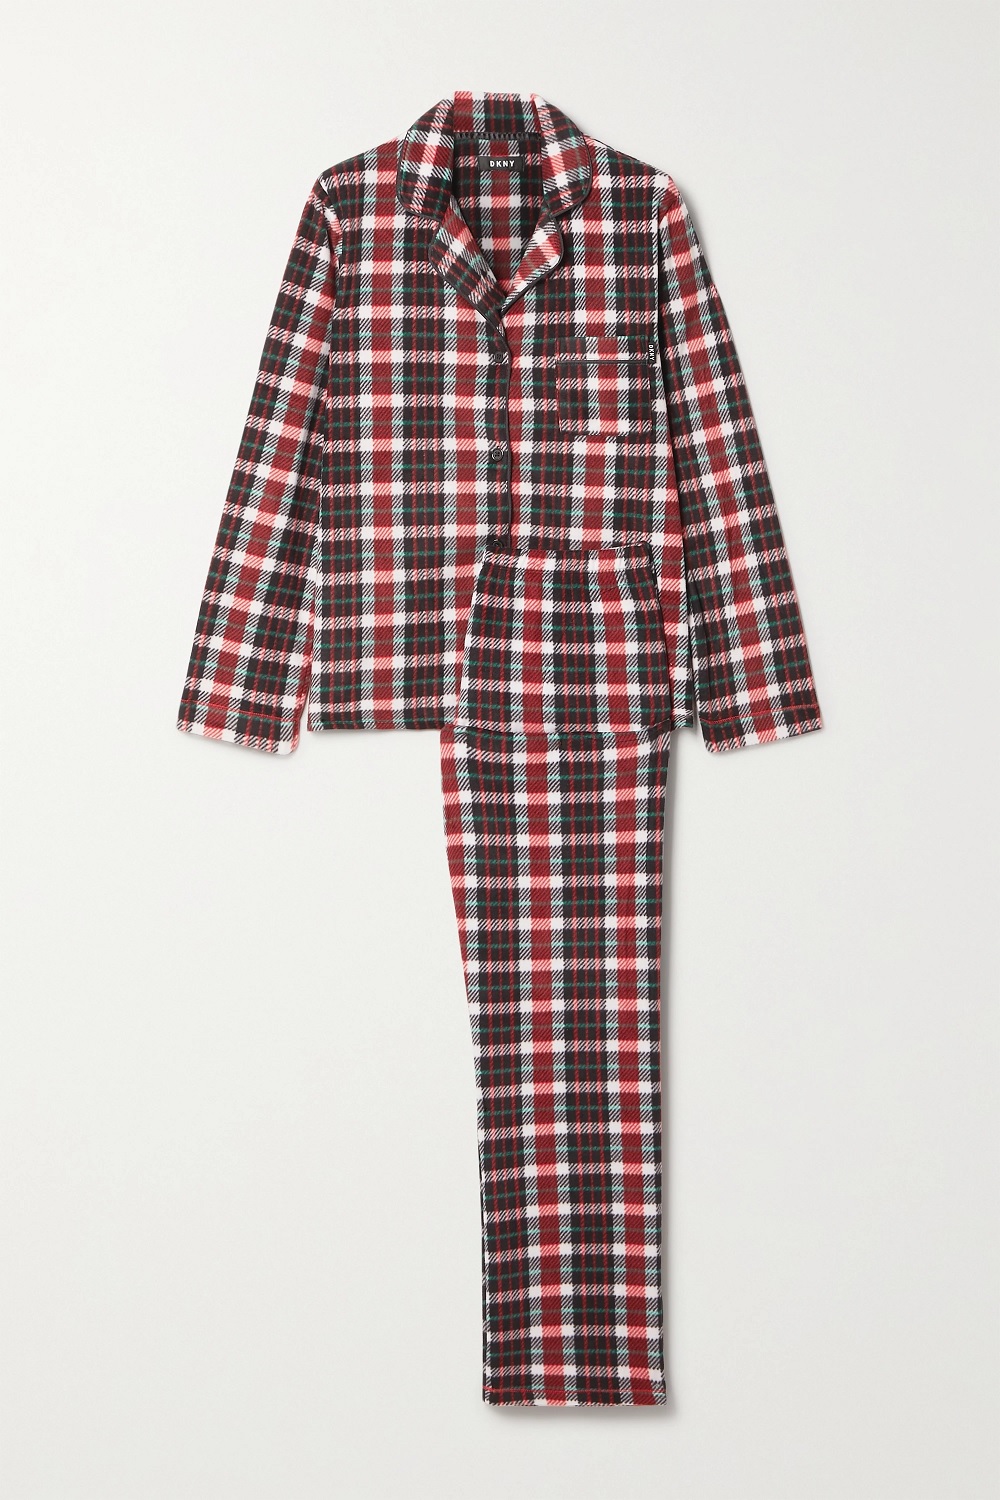 DKNY tople pidžame zima 2020.